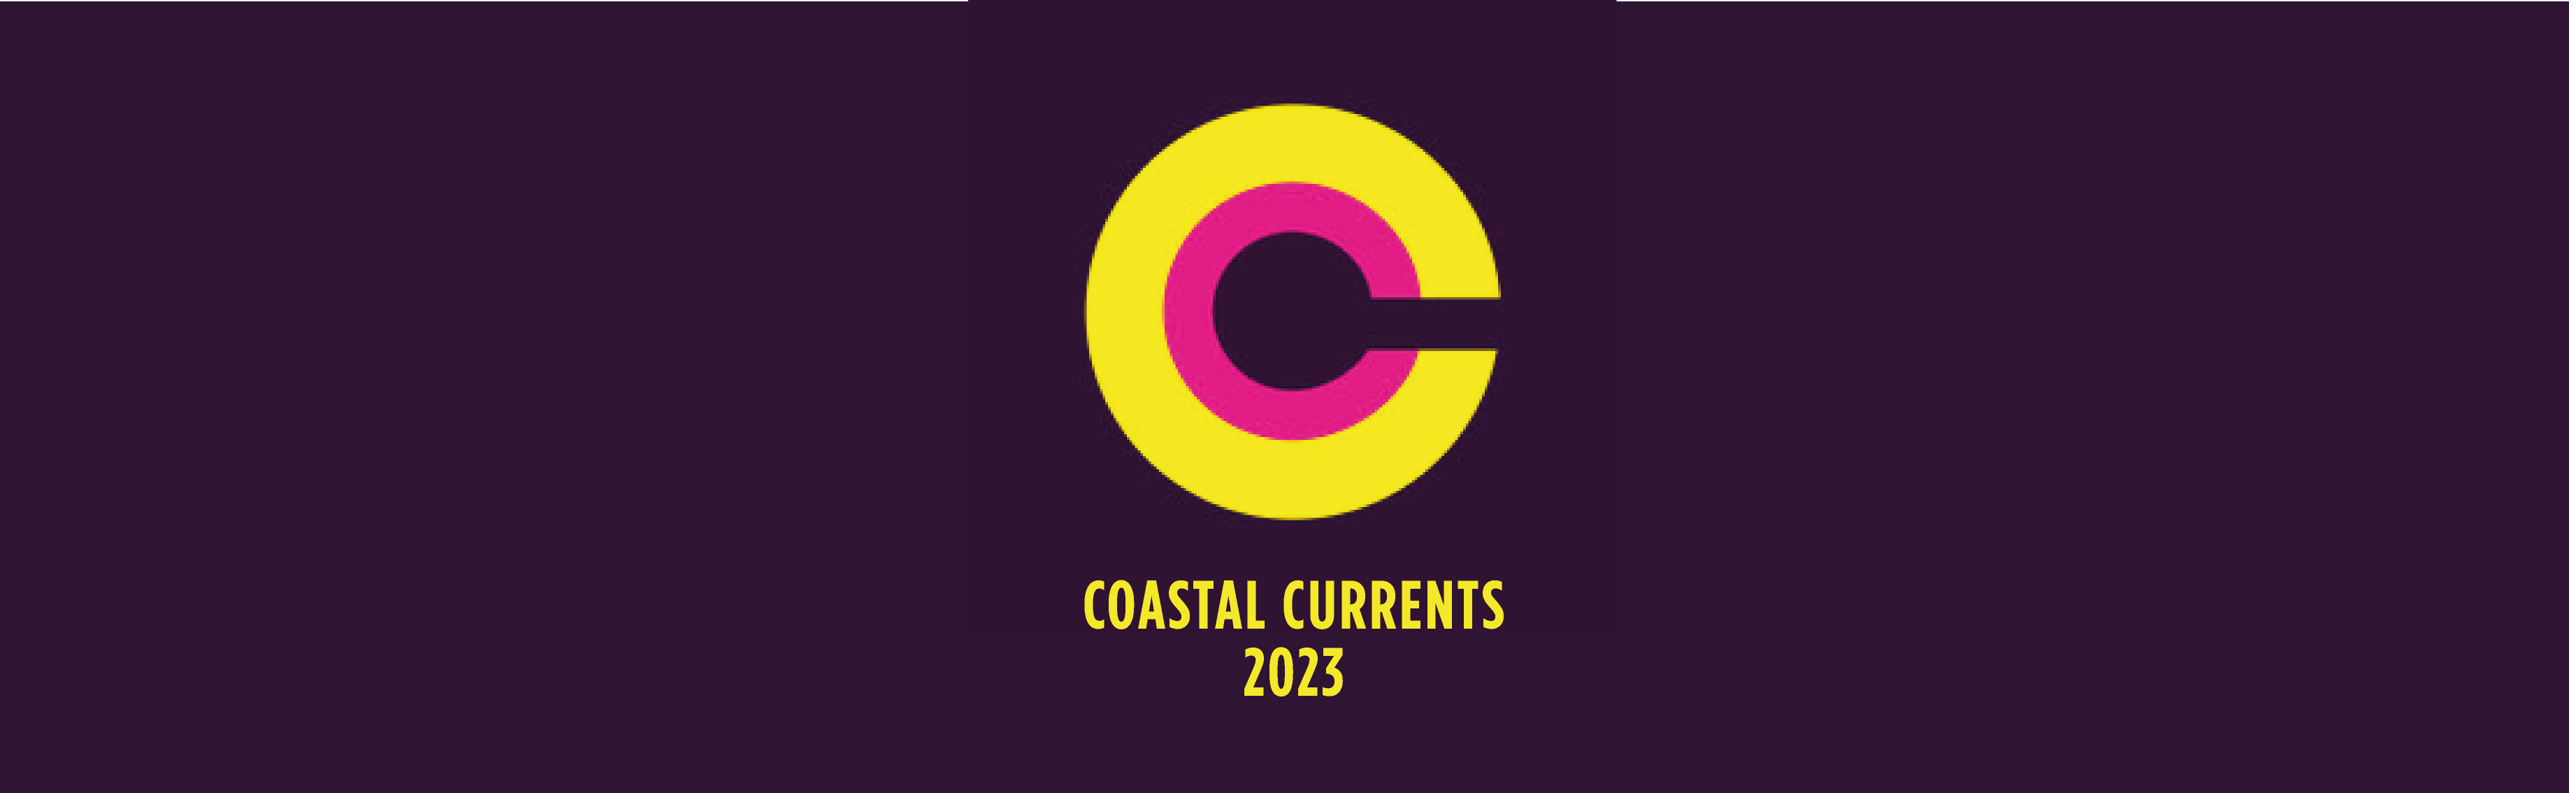 Coastal Currents 2023 logo